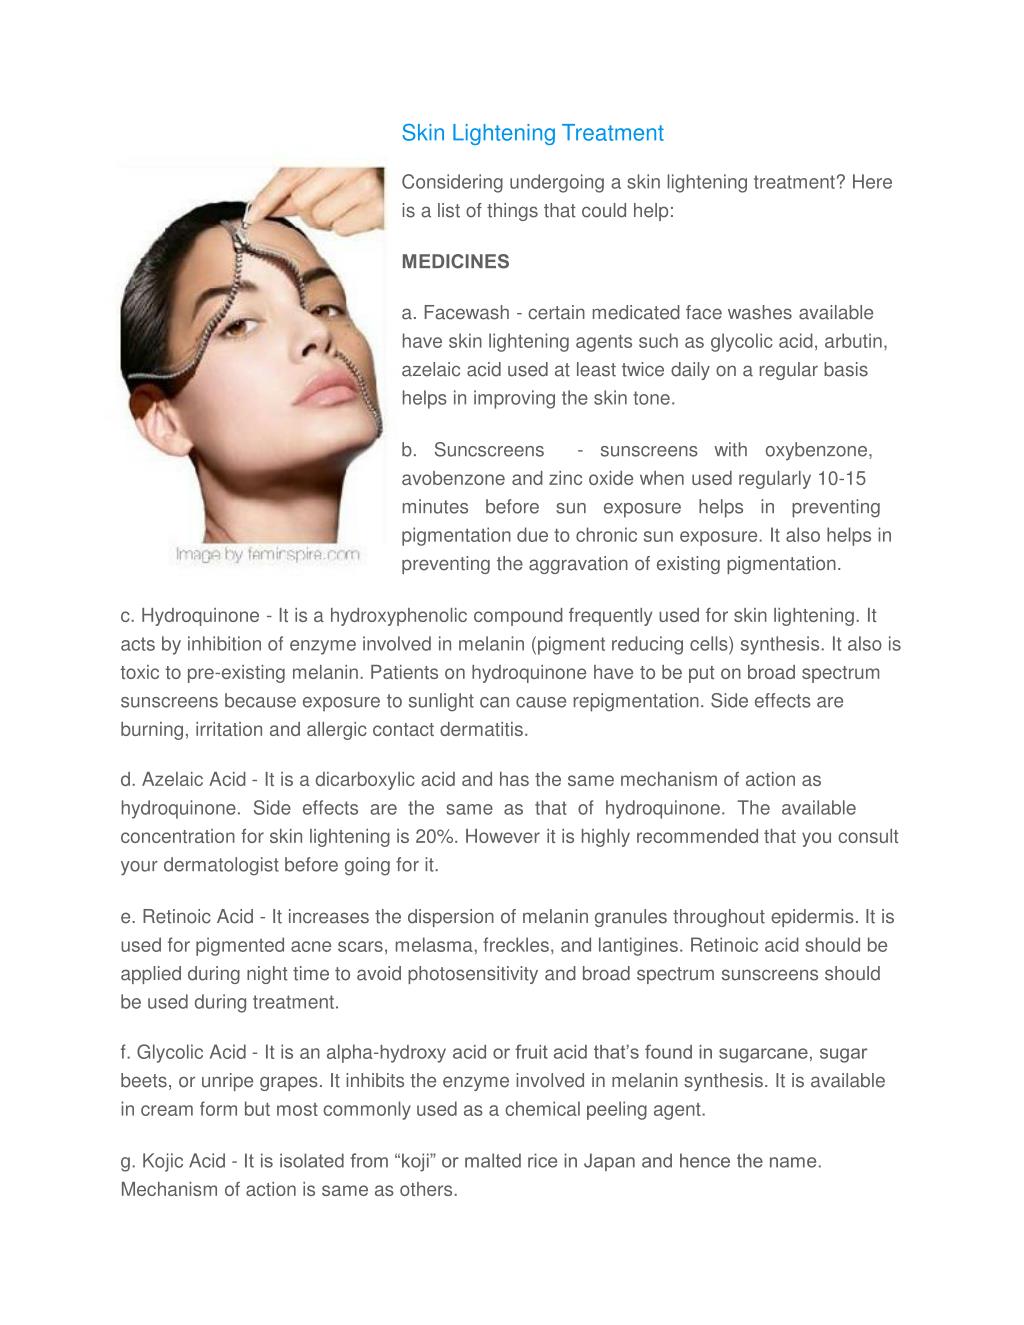 PPT - Skin Lightening Treatment PowerPoint Presentation, free download ...